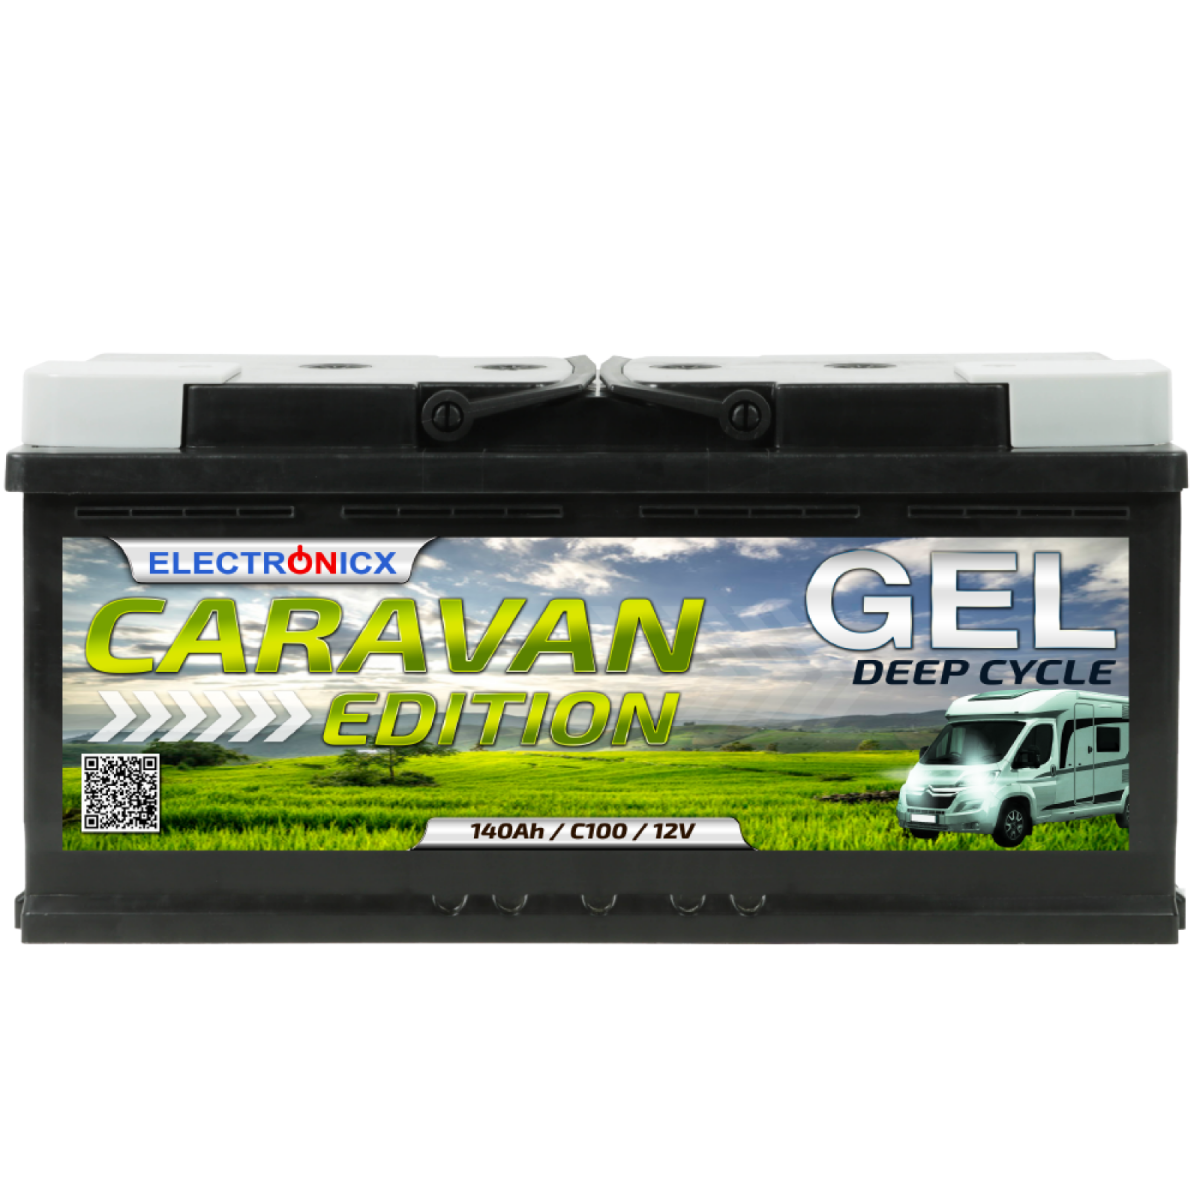 Electronicx Caravan Edition Gel Batterie 140 AH 12V Wohnmobil Boot Versorgung